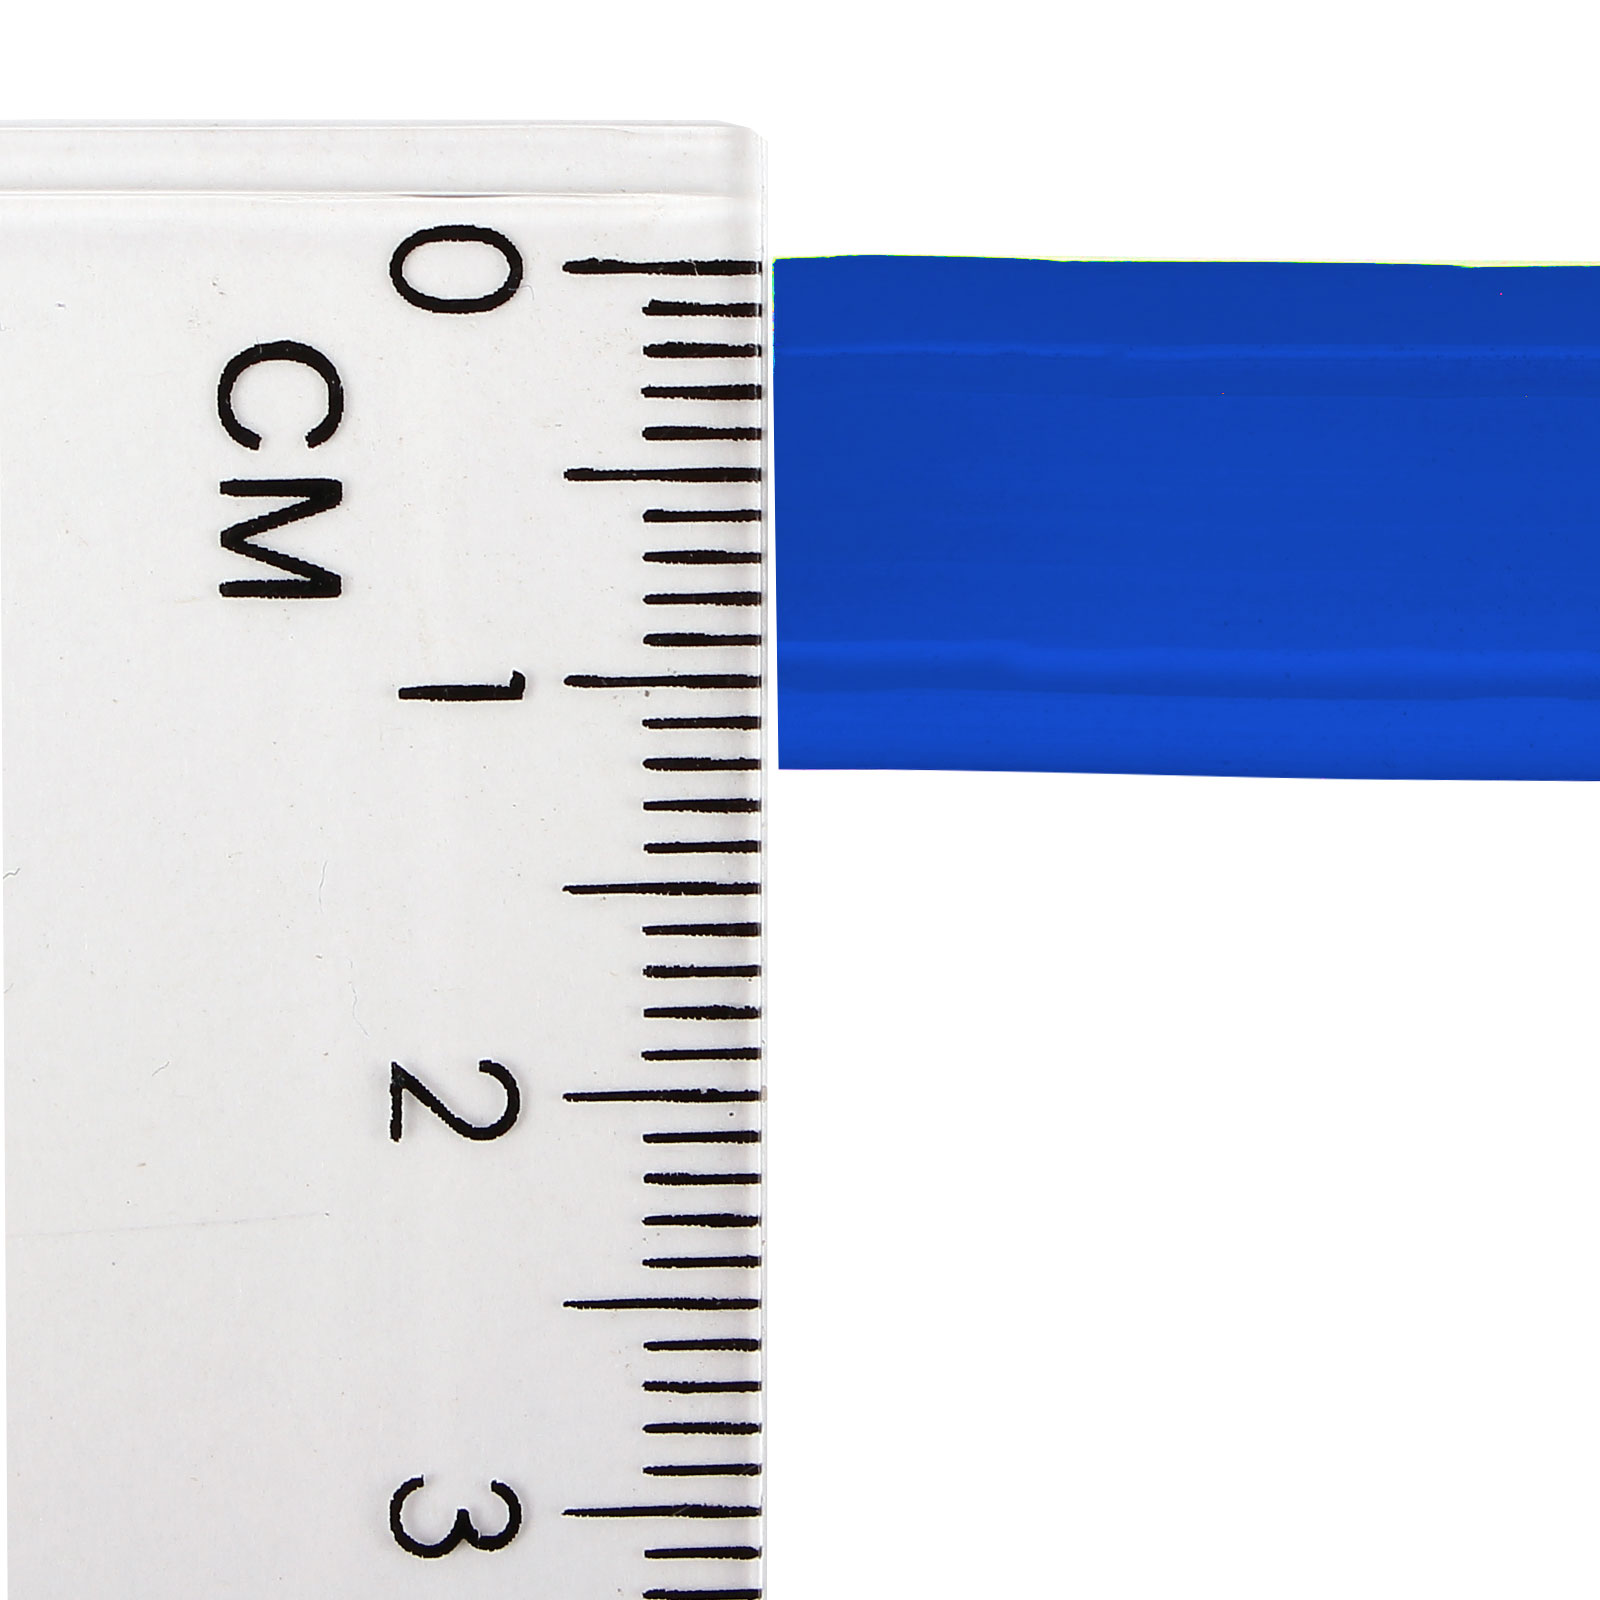 Leistenfüller Einlegeband Gummiprofil Kederband 30m am Stück blau 12mm